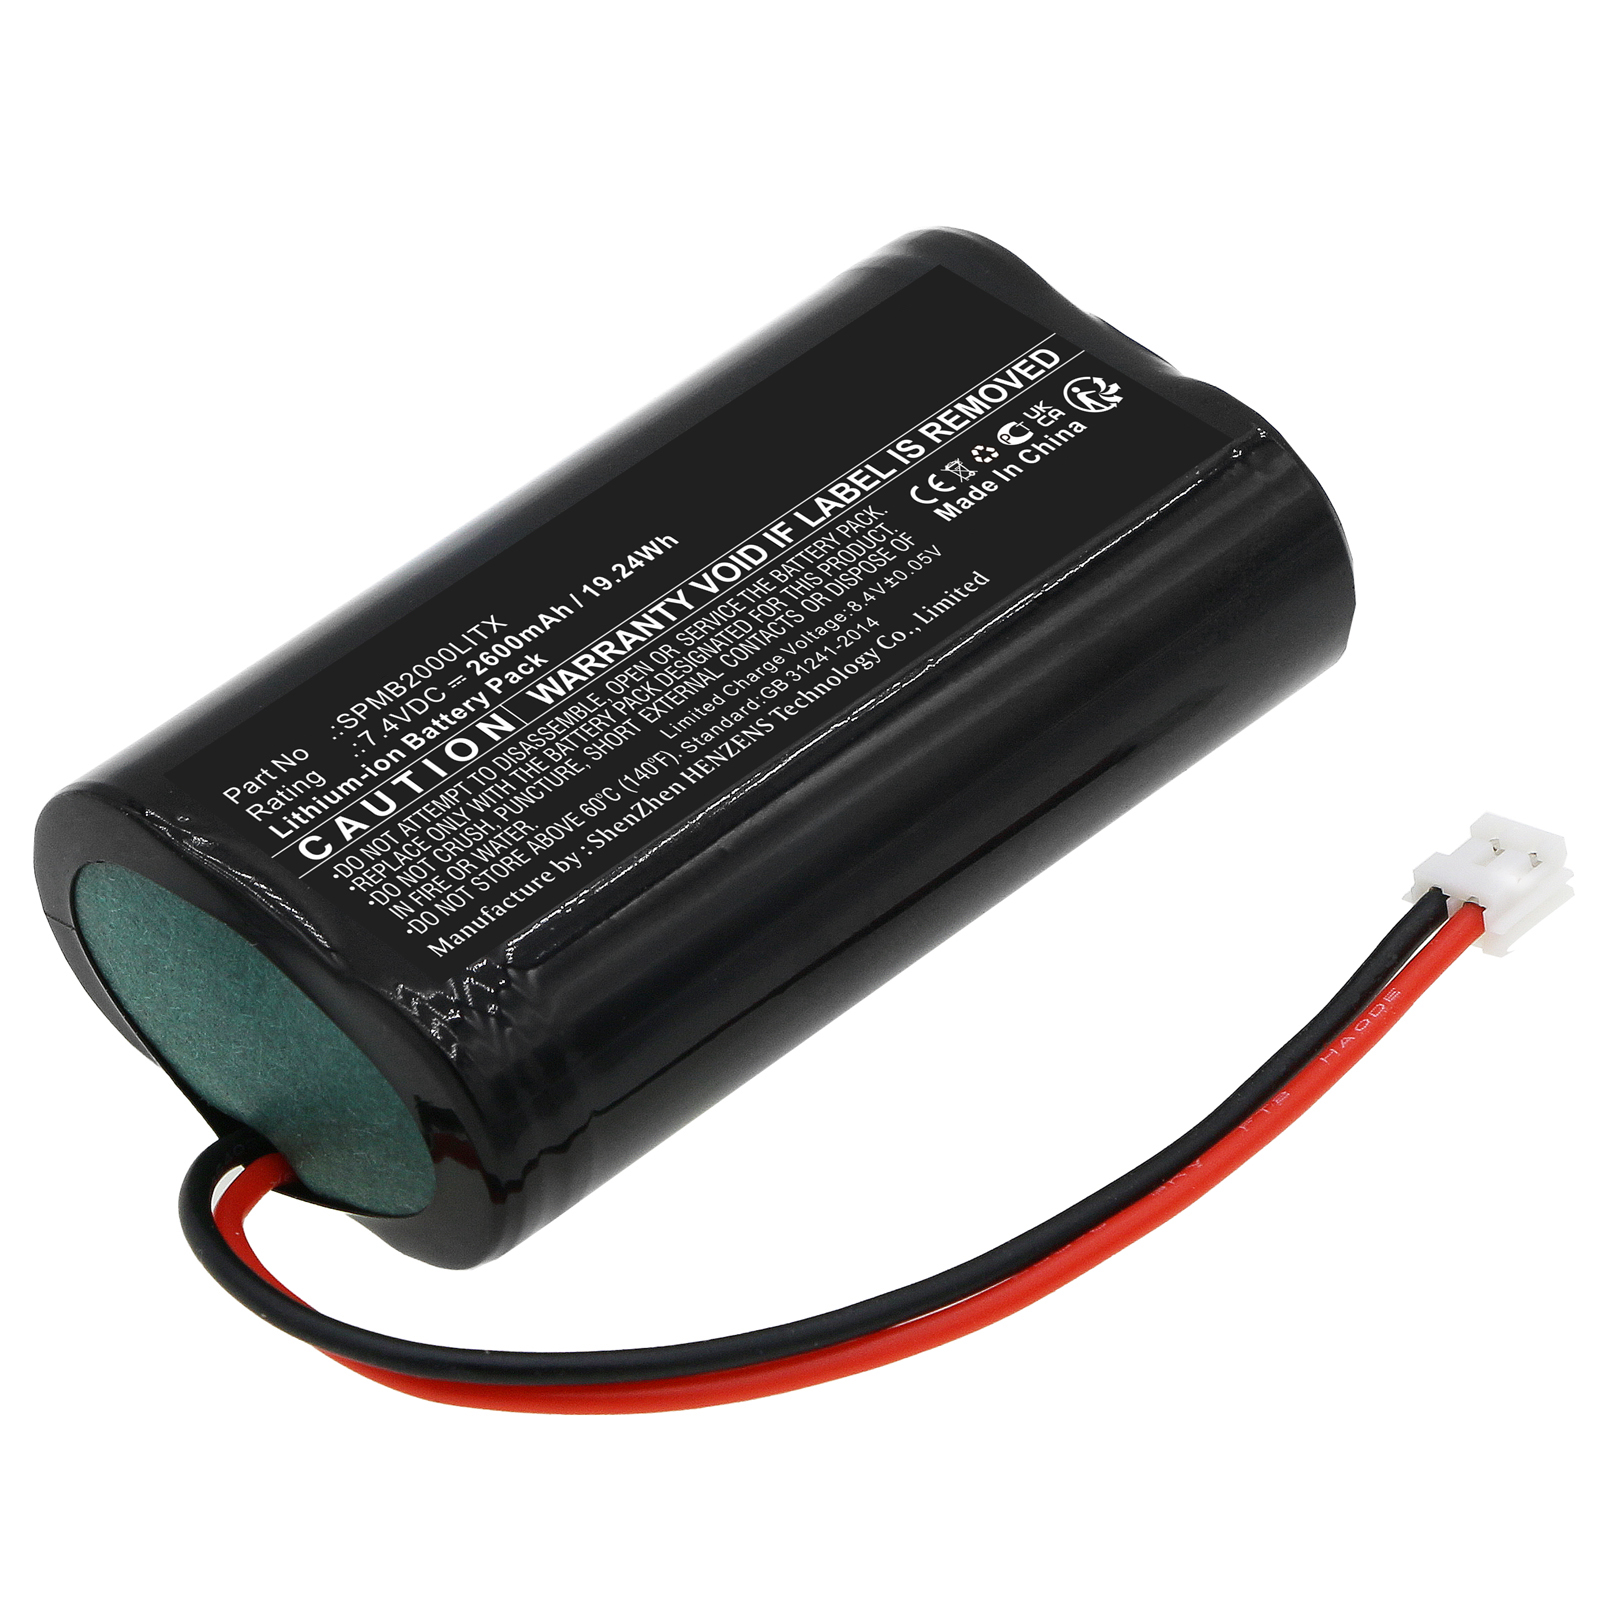 Batteries for SpektrumRemote Control